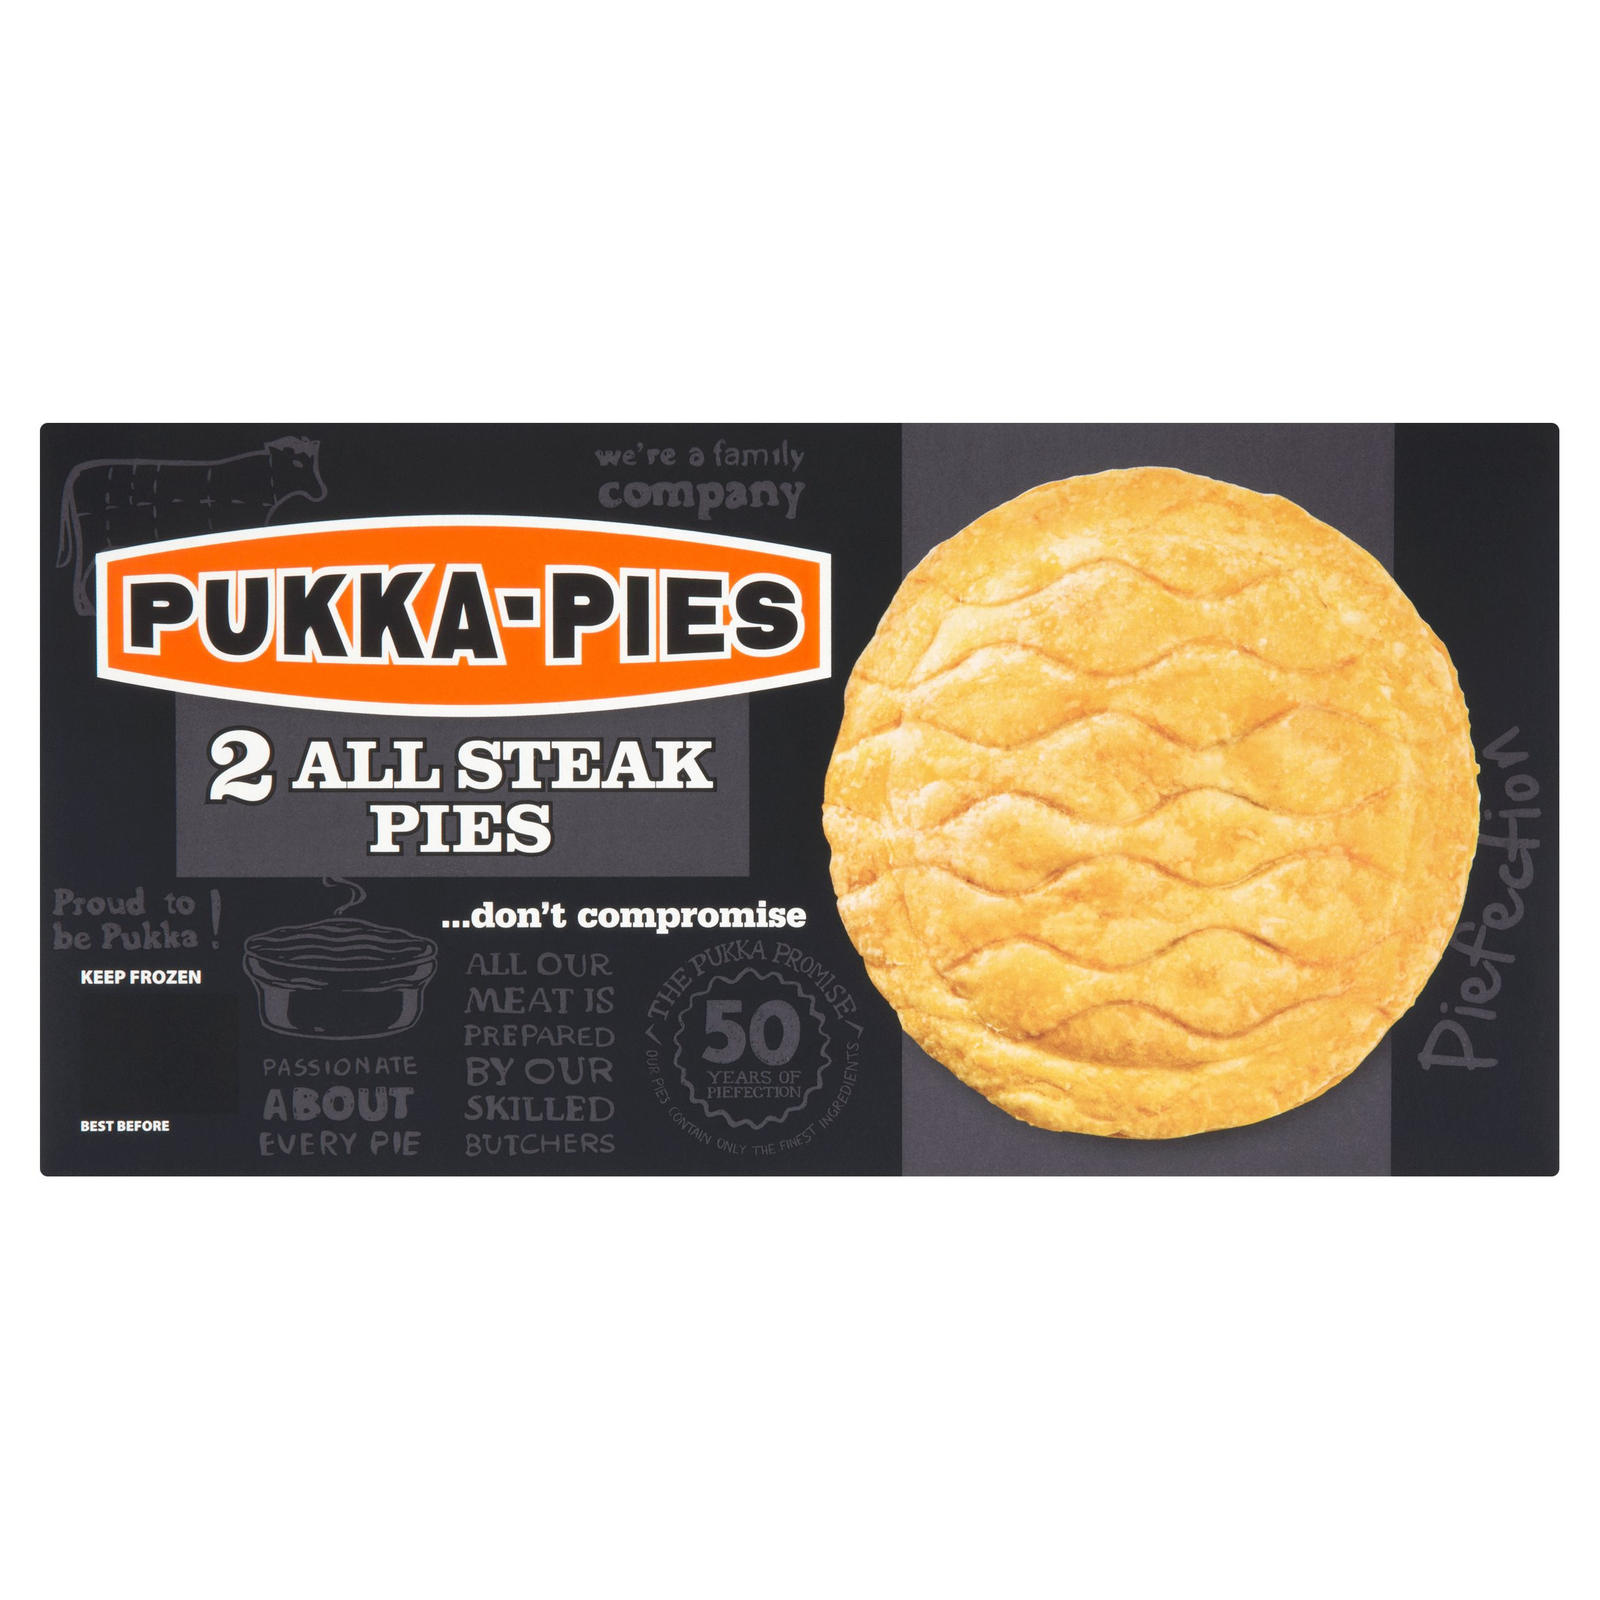 Pukka-Pies 2 All Steak Pies | Pies & Puddings | Iceland Foods